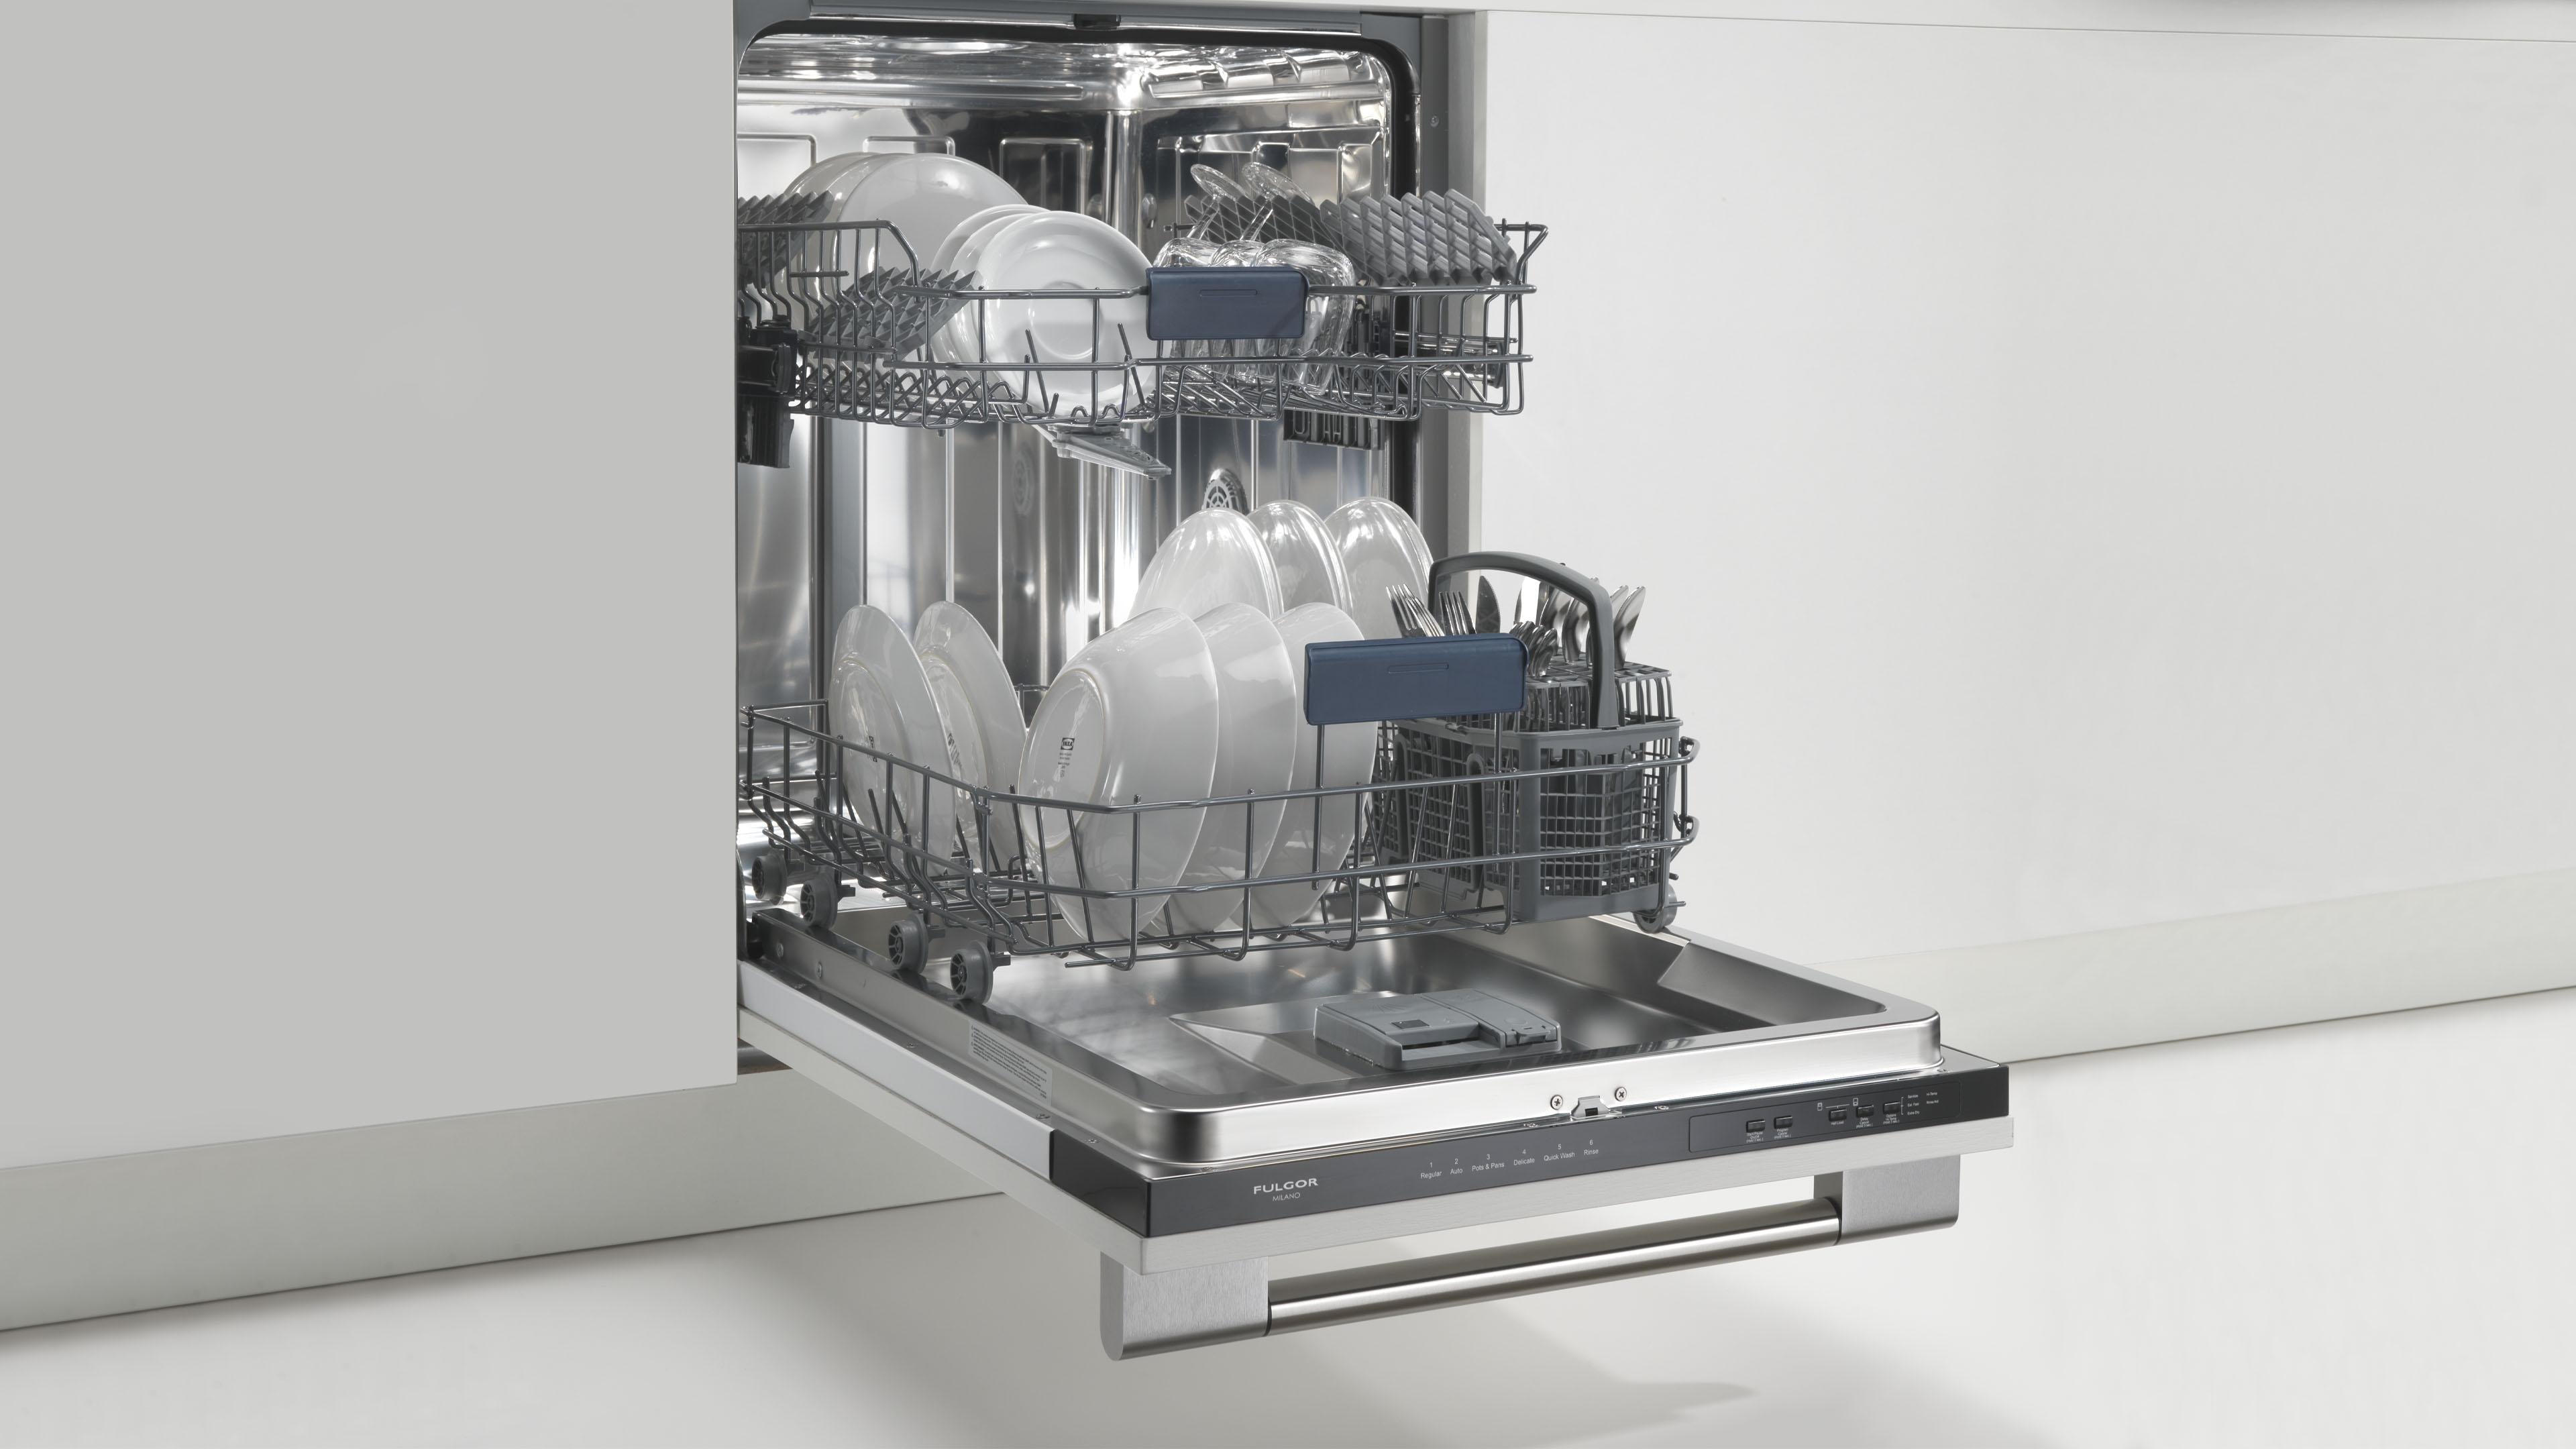 Fulgor Milano - 49 dBA Built In Dishwasher in White - F4DWT24FI1